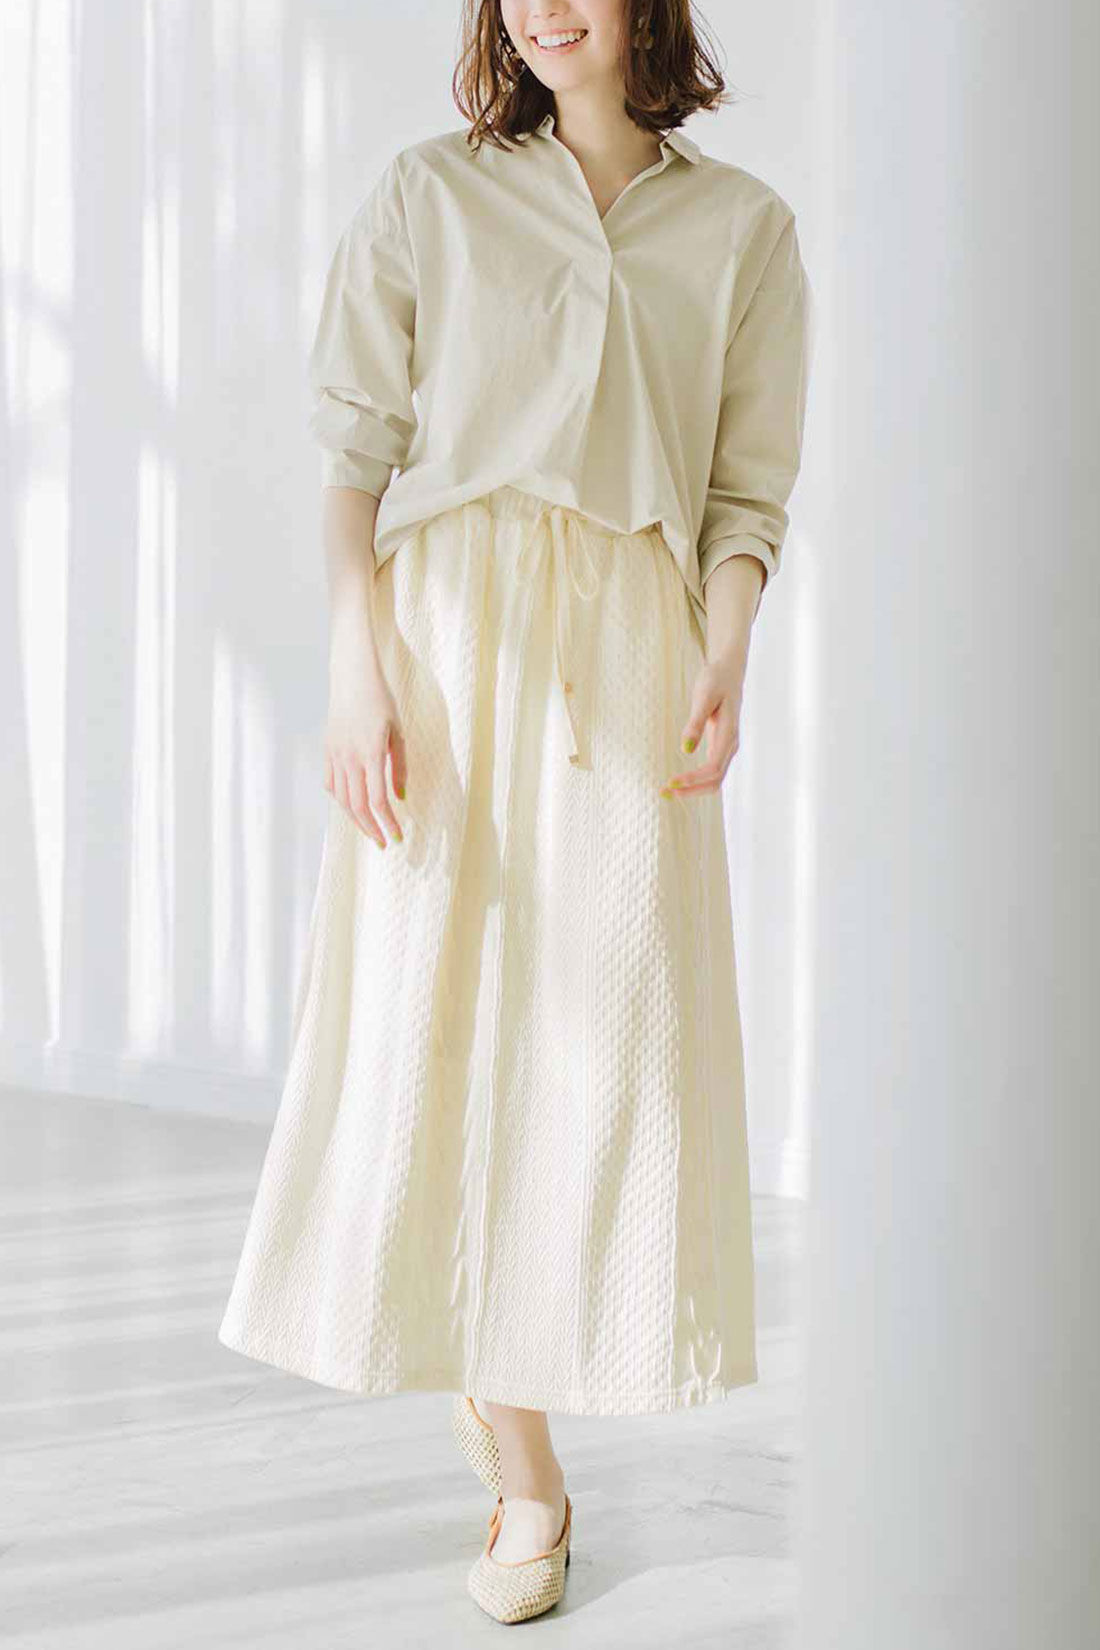 Live in  comfort|Live love cottonプロジェクト　リブ イン コンフォート　編み柄が素敵なオーガニックコットンロングスカート〈ブラック〉|※着用イメージです。お届けするカラーとは異なります。